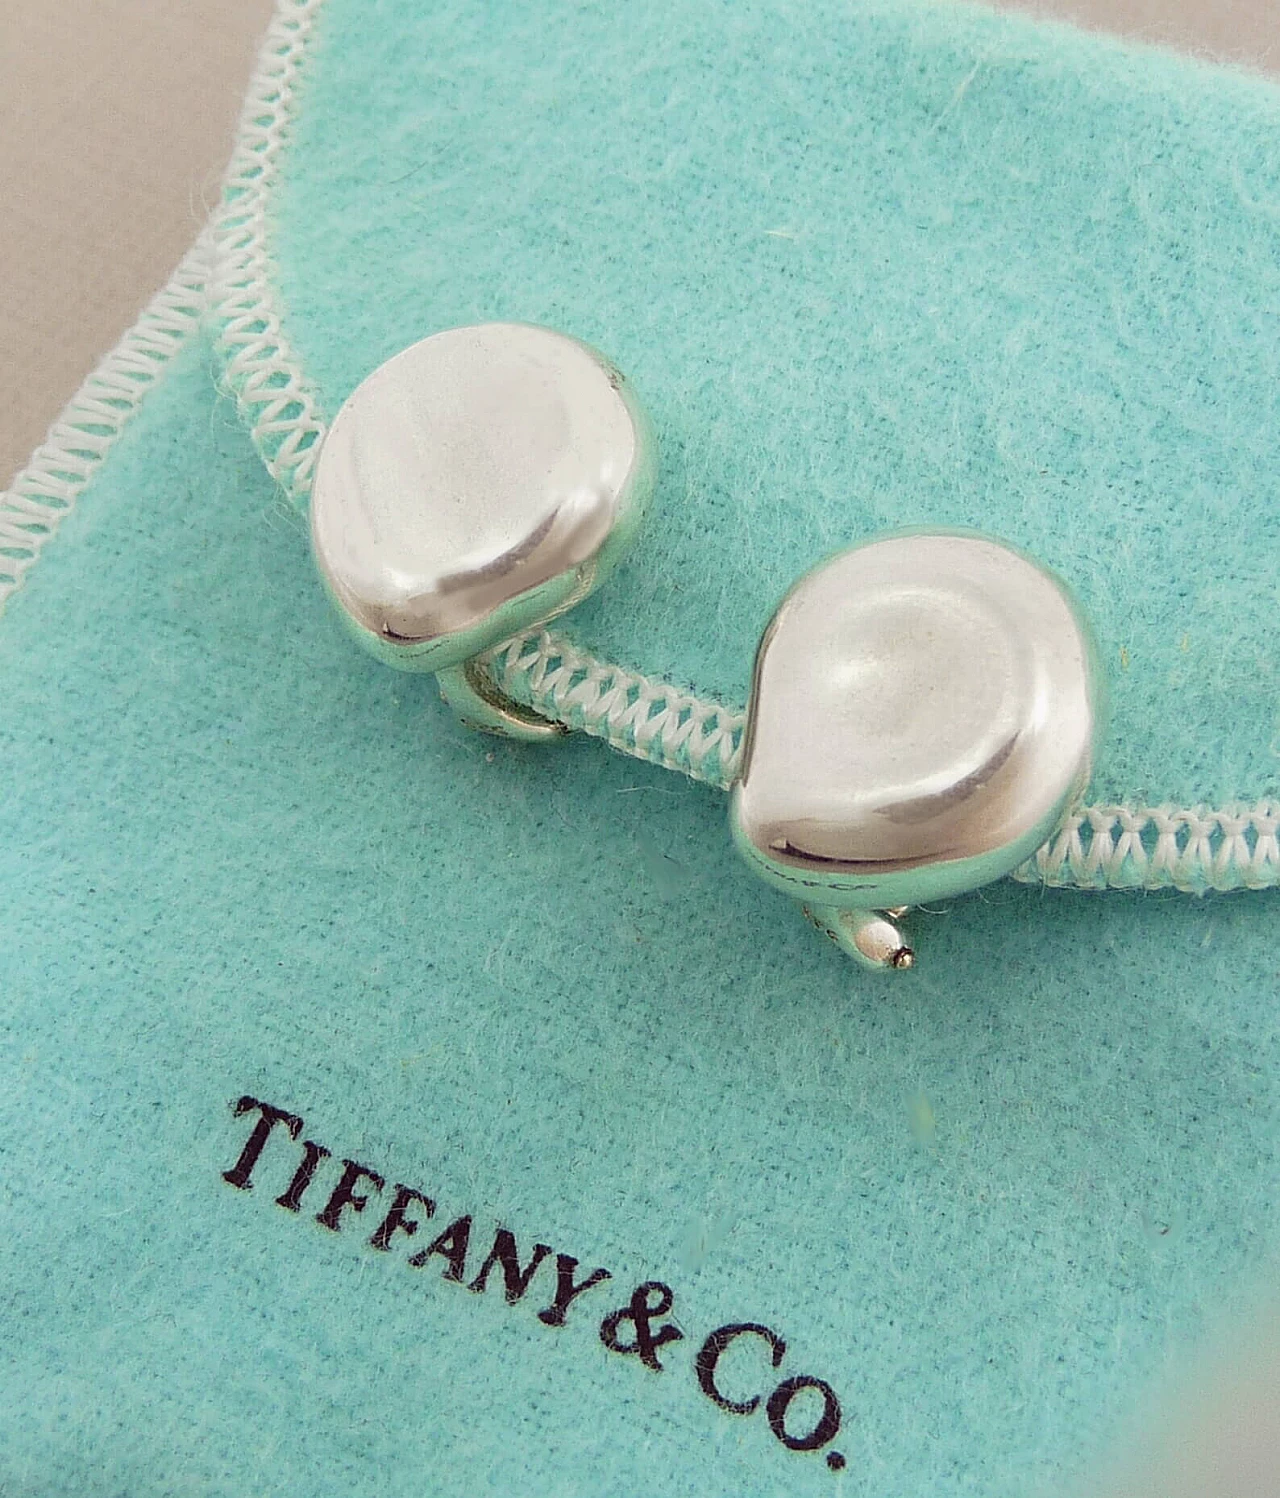 Bean earrings by Elsa Peretti for Tiffany & Co, 1990s 8